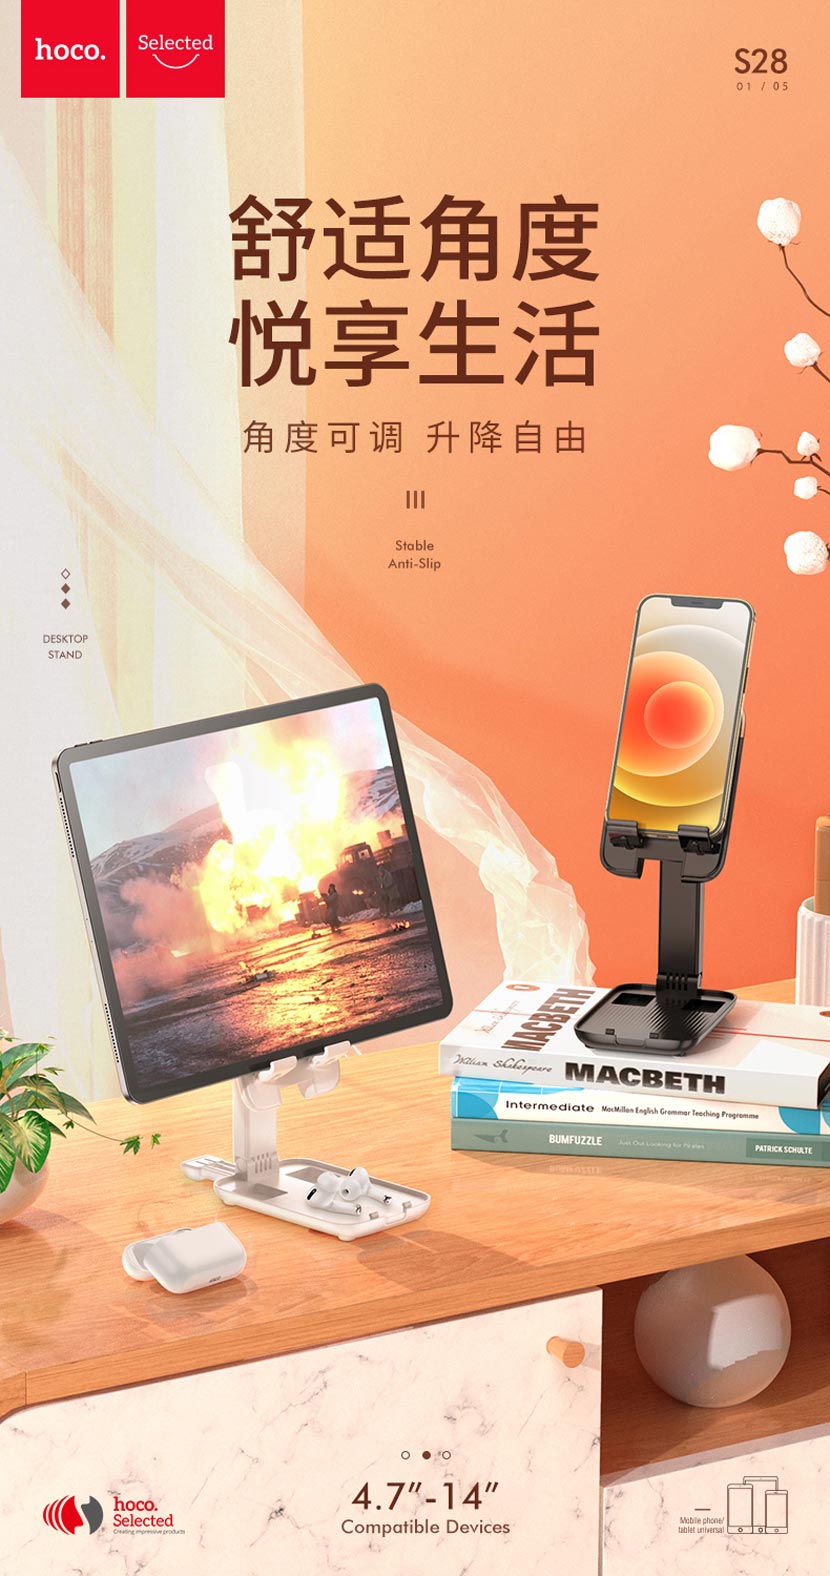 hoco selected news s28 dawn folding desktop stand cn